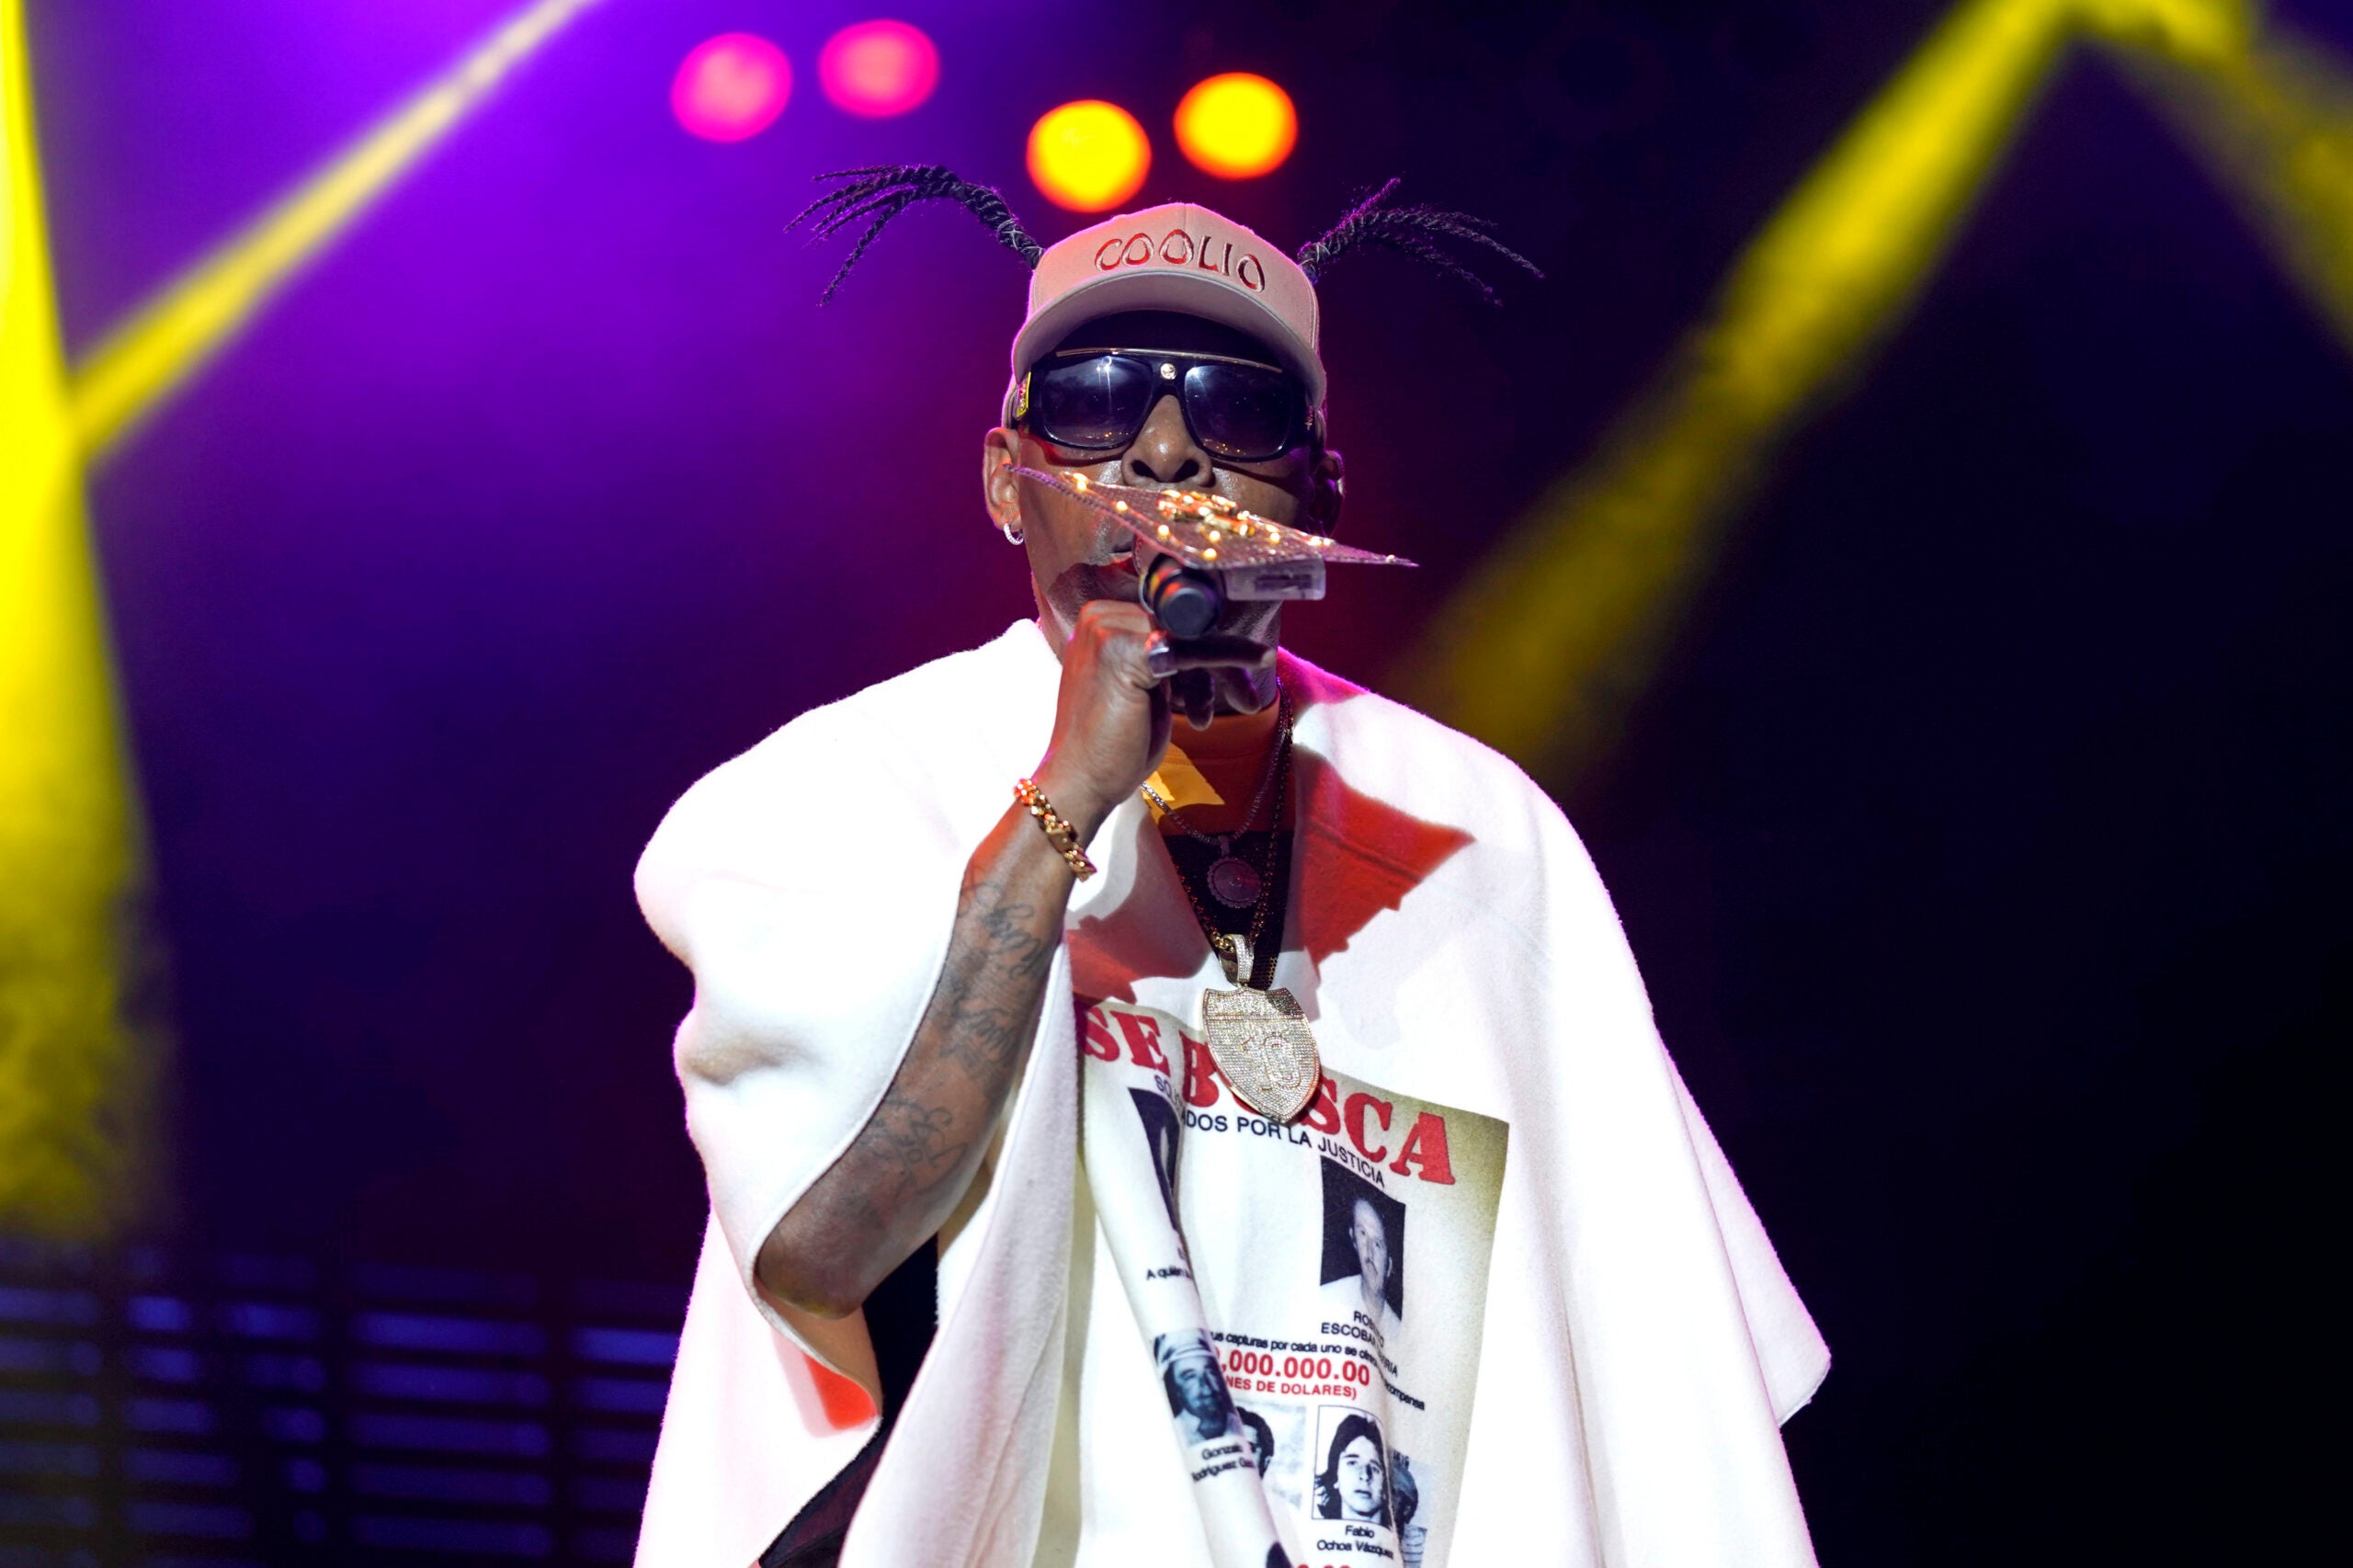 Rapper Coolio's Gangsta's Paradise lyrics shone light on his turbulent life  - Daily Star